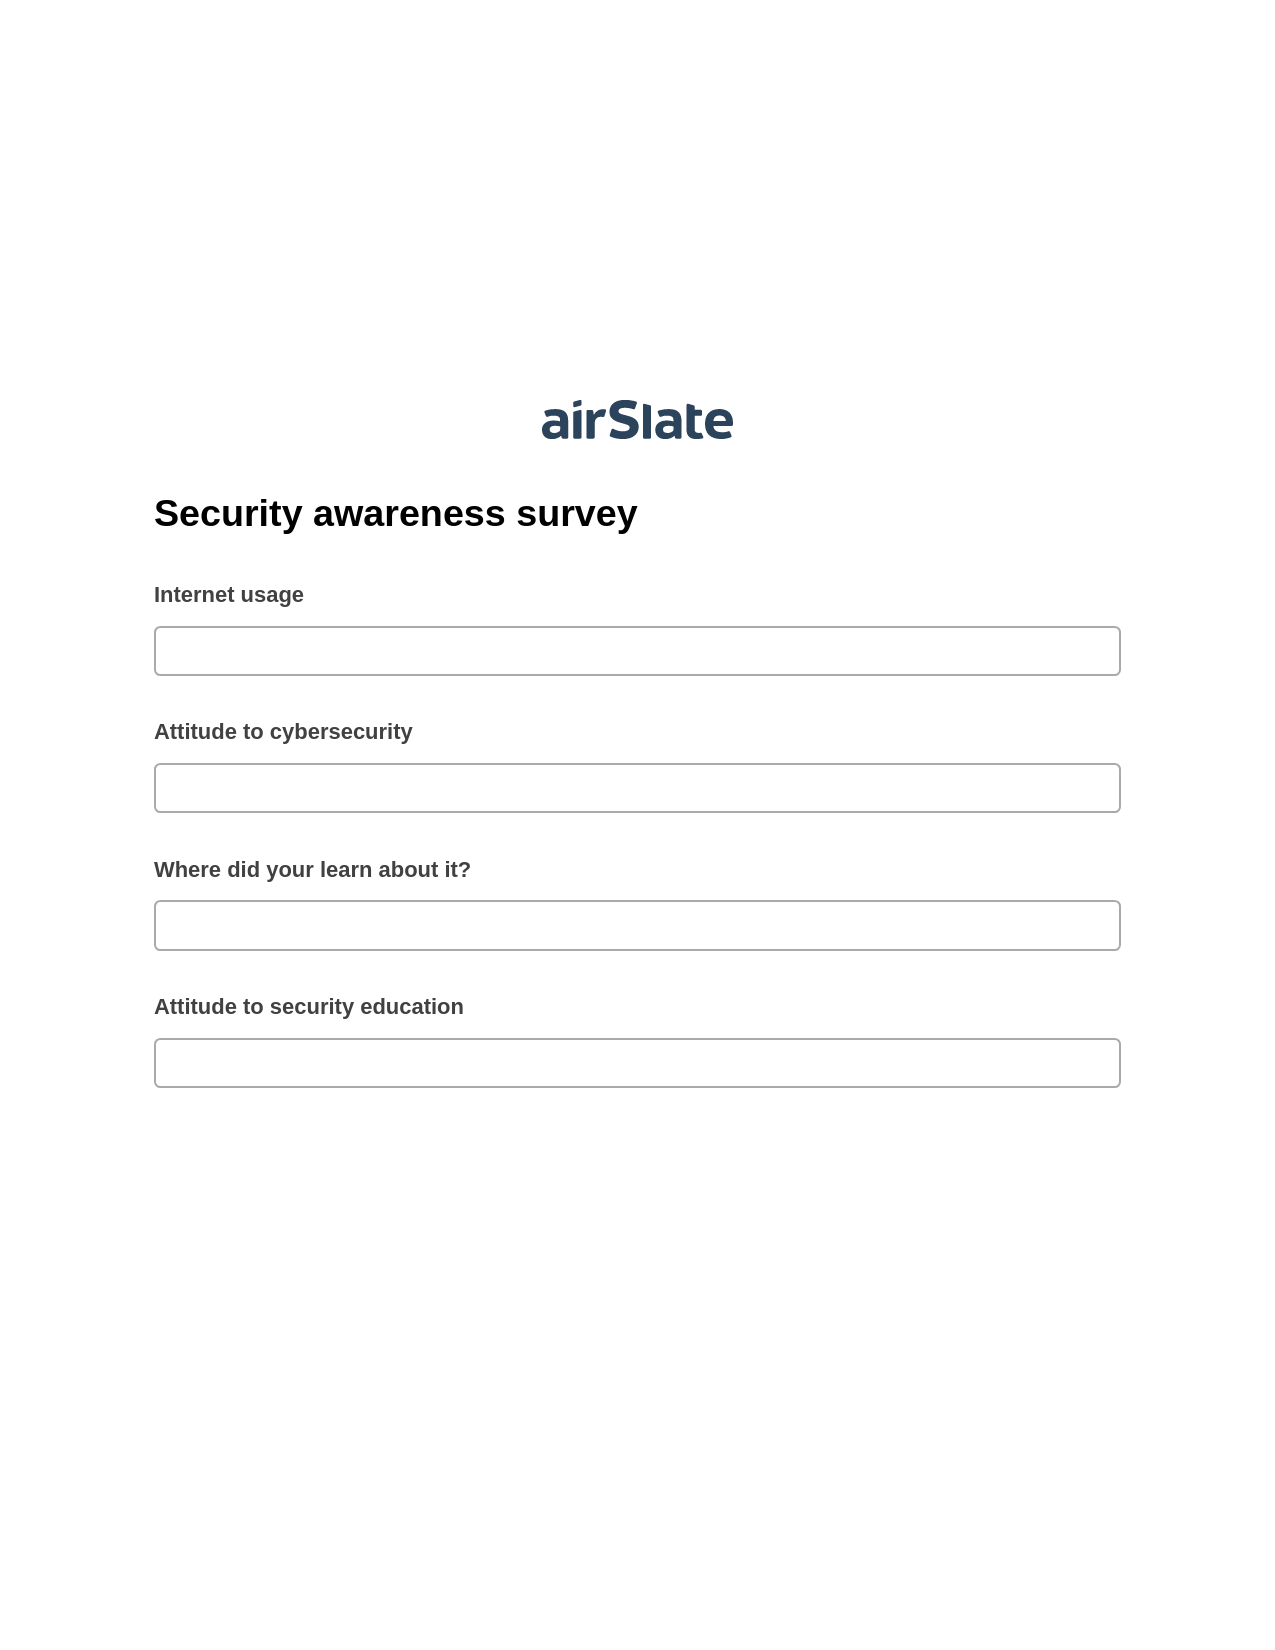 Multirole Security awareness survey Pre-fill Document Bot, Assign Slate Name Bot, Export to MySQL Bot